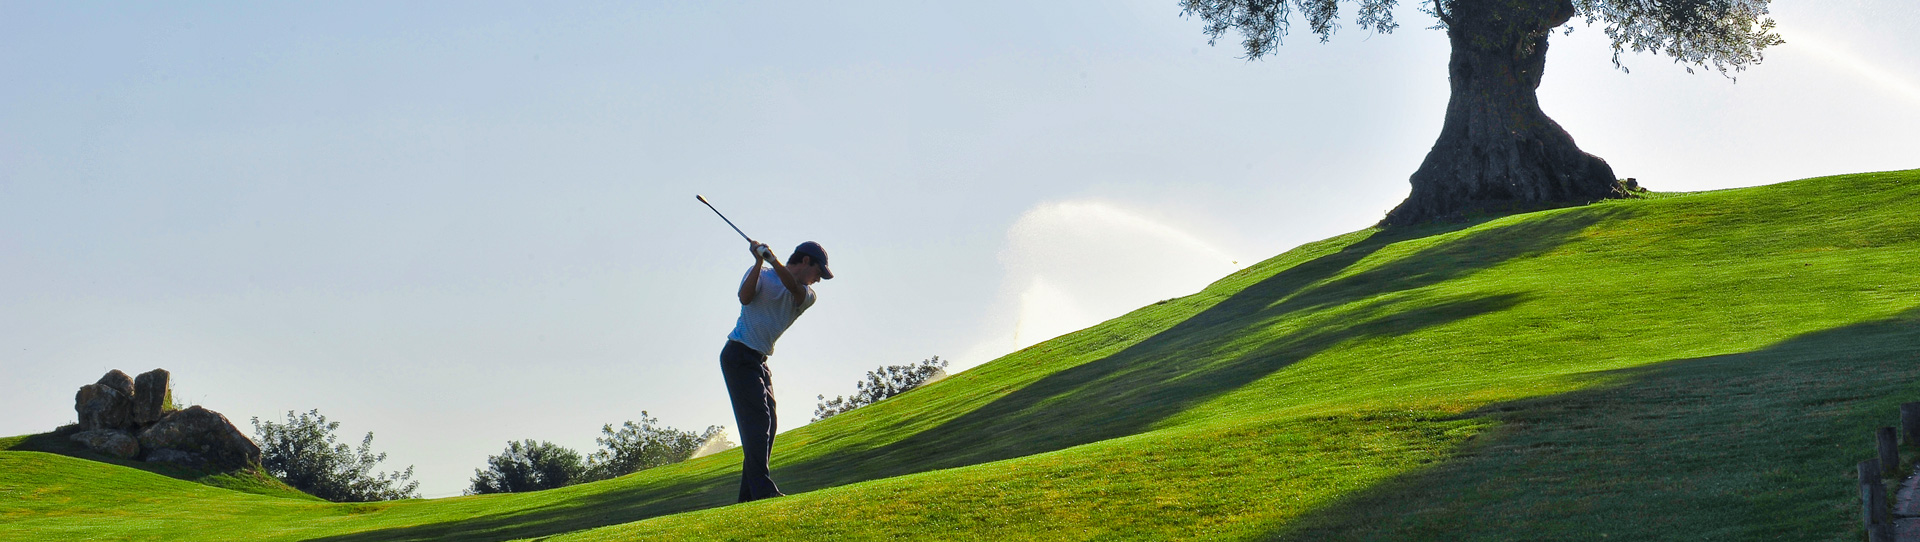 Portugal golf courses - Benamor Golf Course - Photo 2